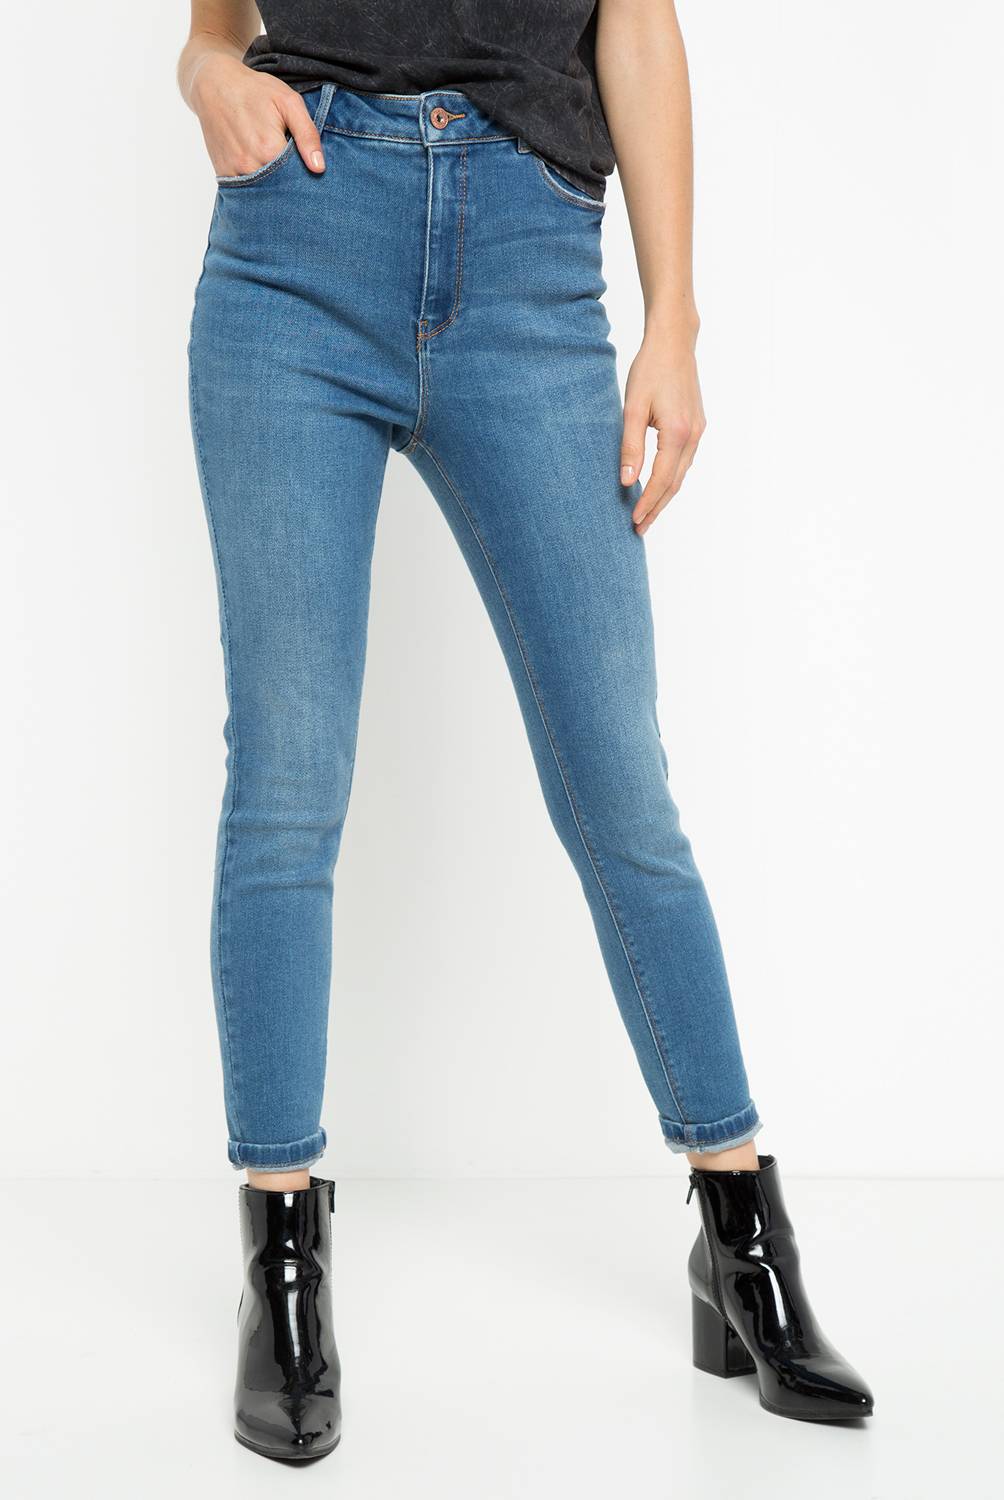 ONLY - Only Jeans de Algodón Skinny Mujer